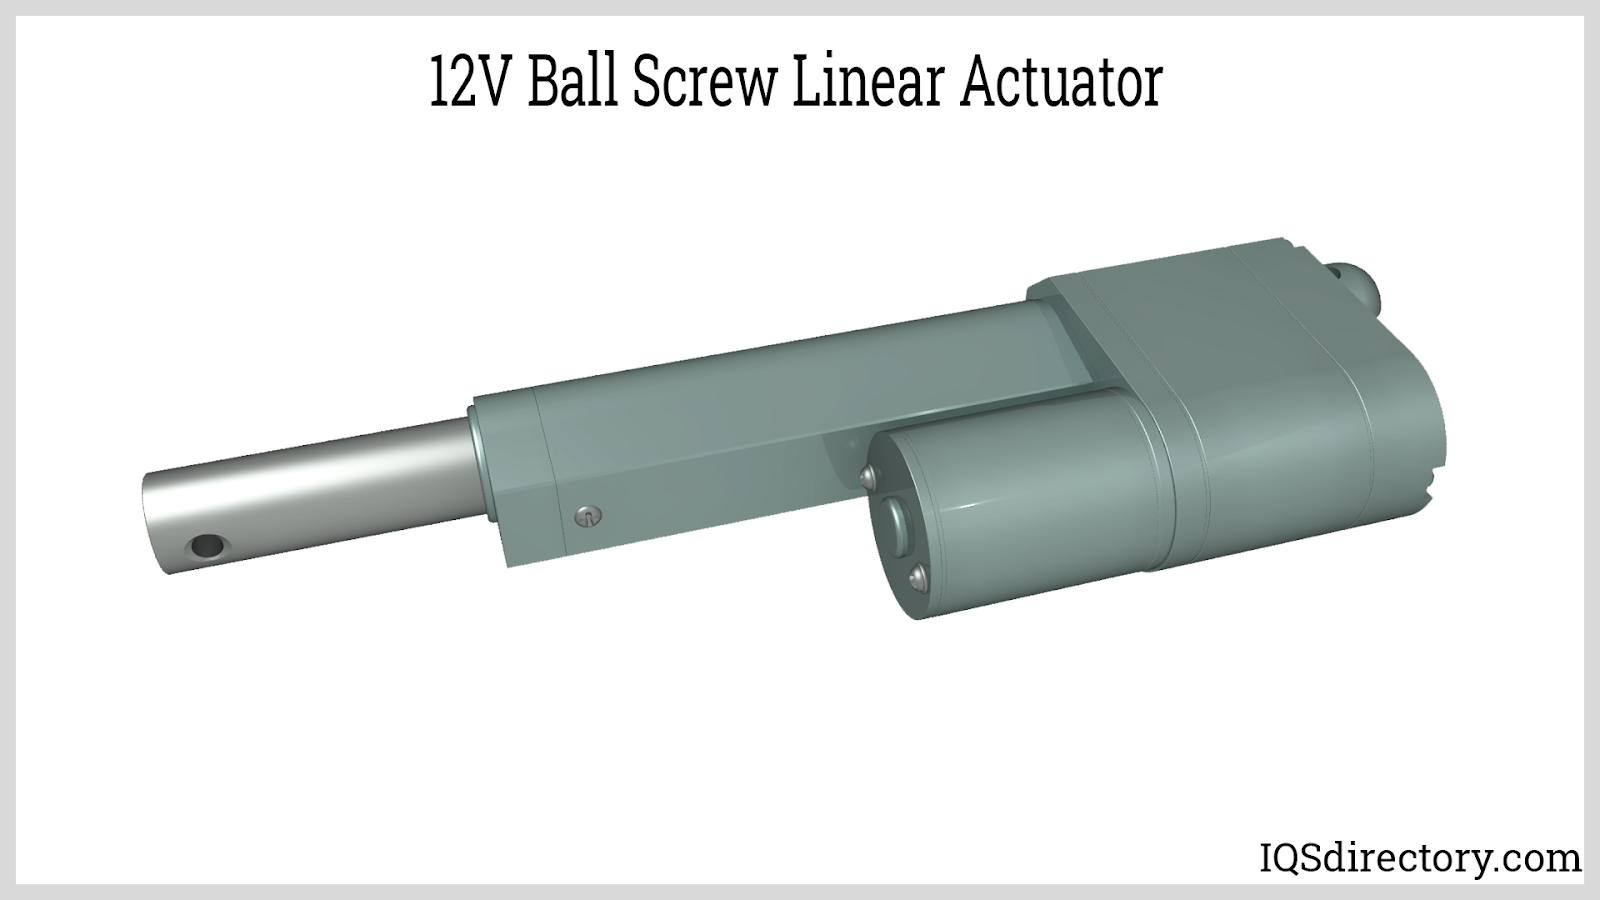 12V Ball Screw Linear Actuator